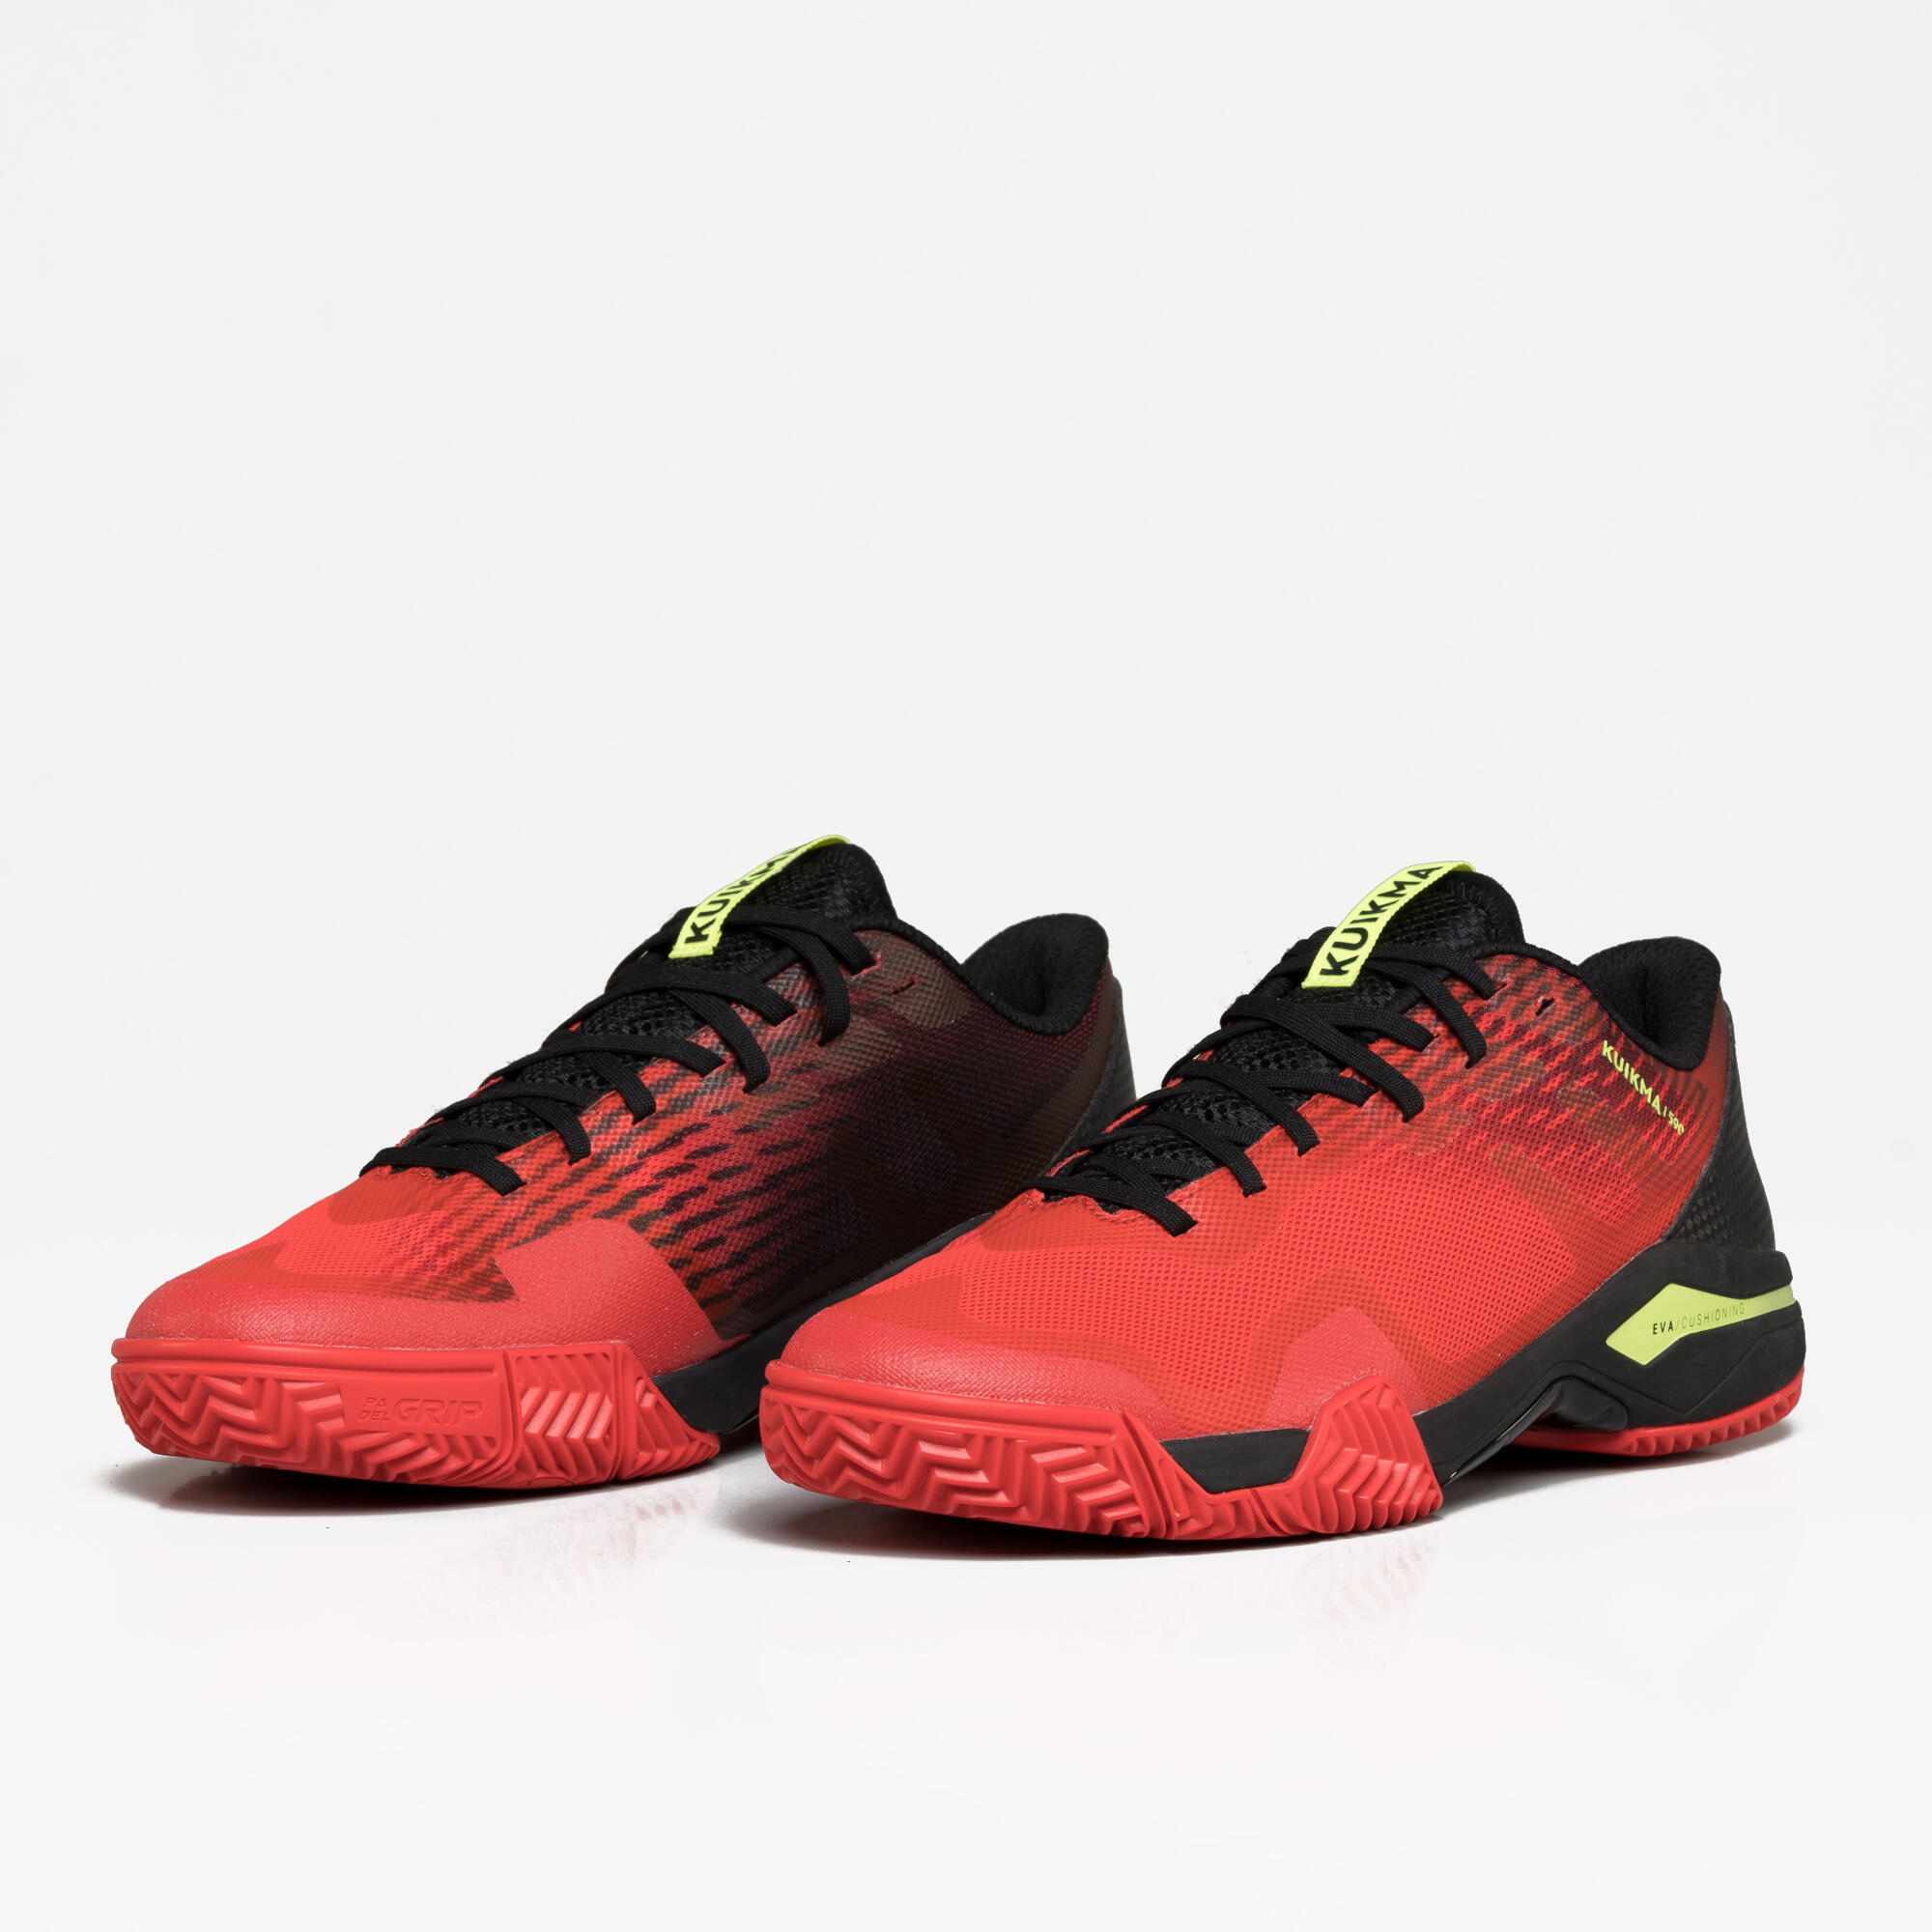 Men's Padel Shoes PS 590 - Red/Black 3/6